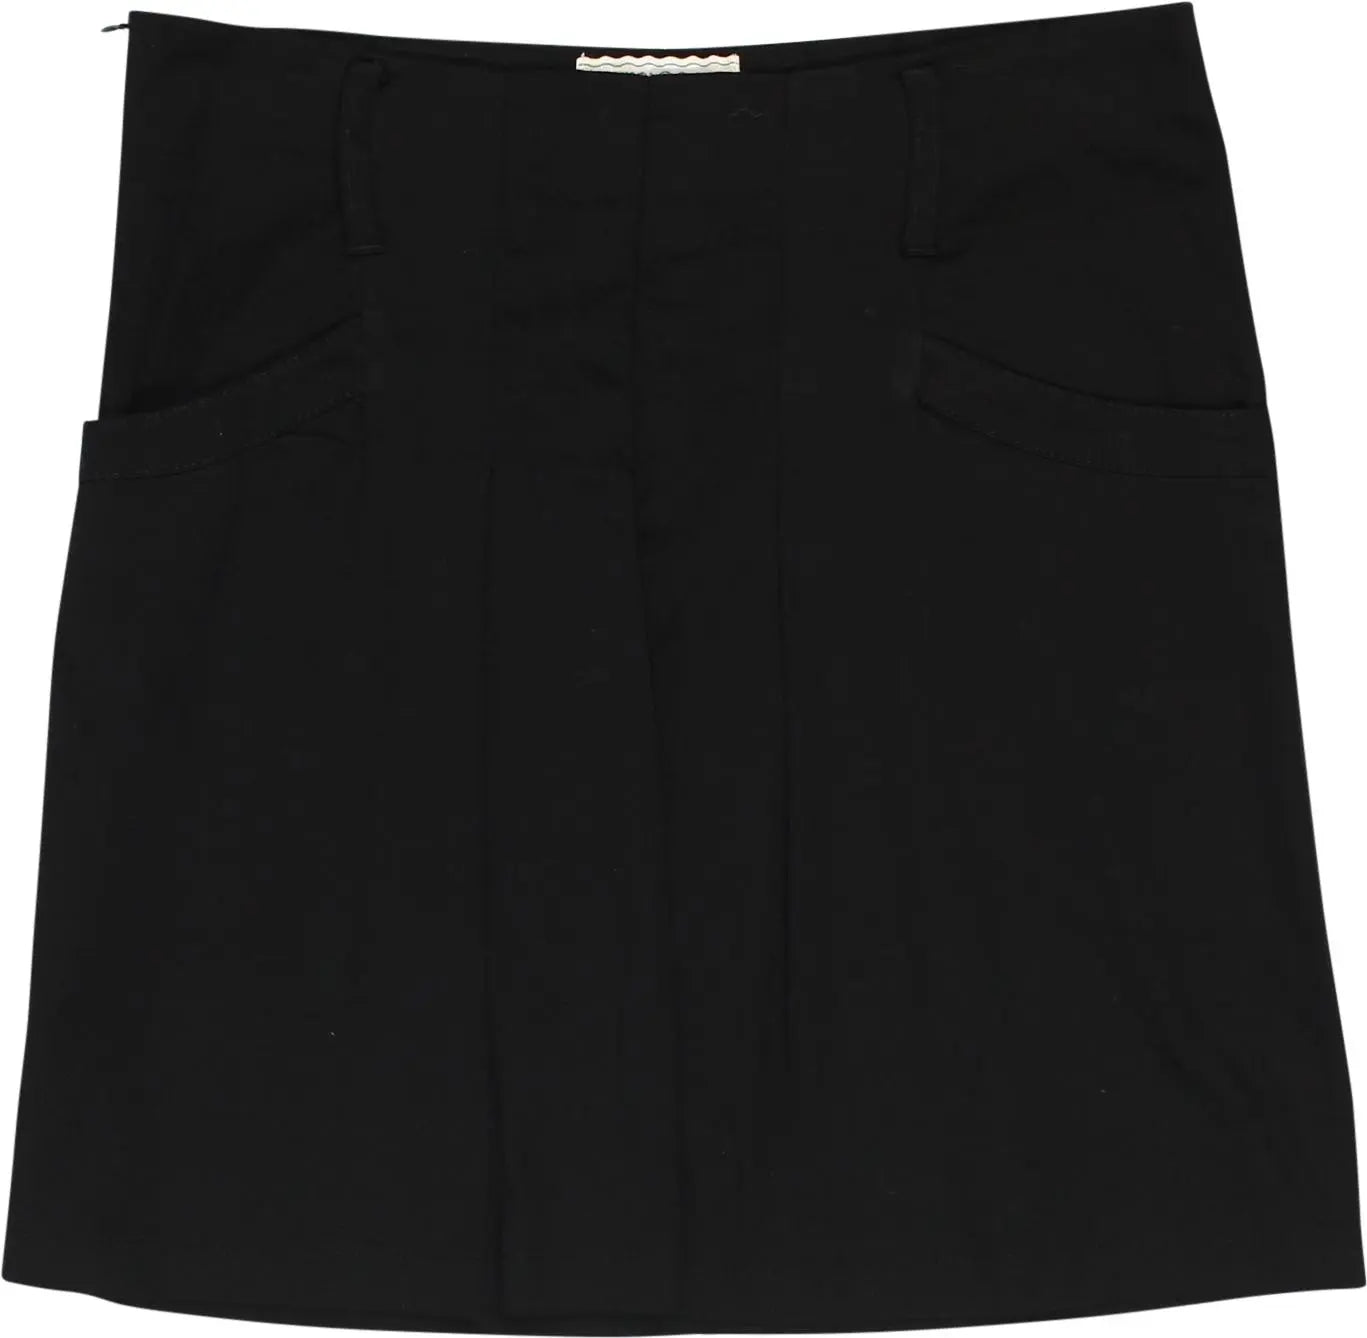 Bershka - Black Mini Skirt- ThriftTale.com - Vintage and second handclothing